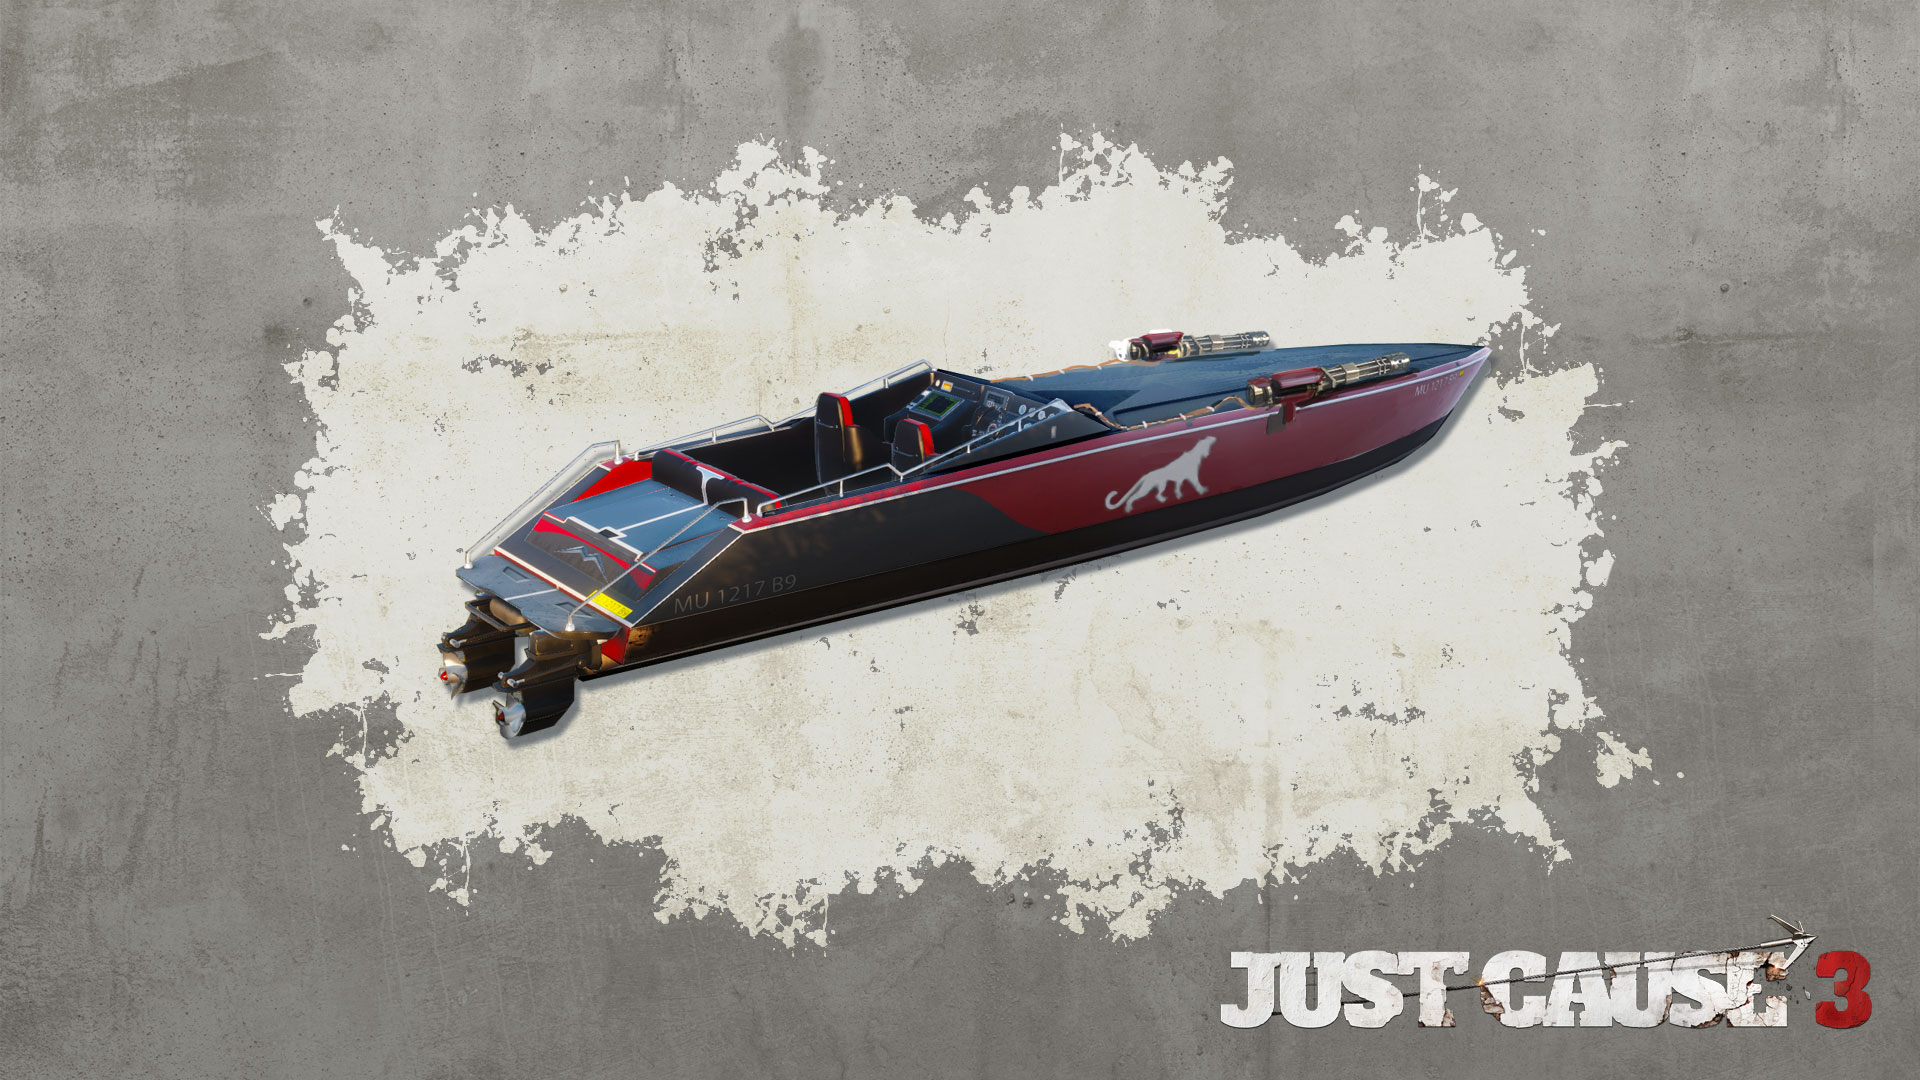 Just Cause 3 - Mini-Gun Racing Boat DLC Steam CD Key [USD 1.56]